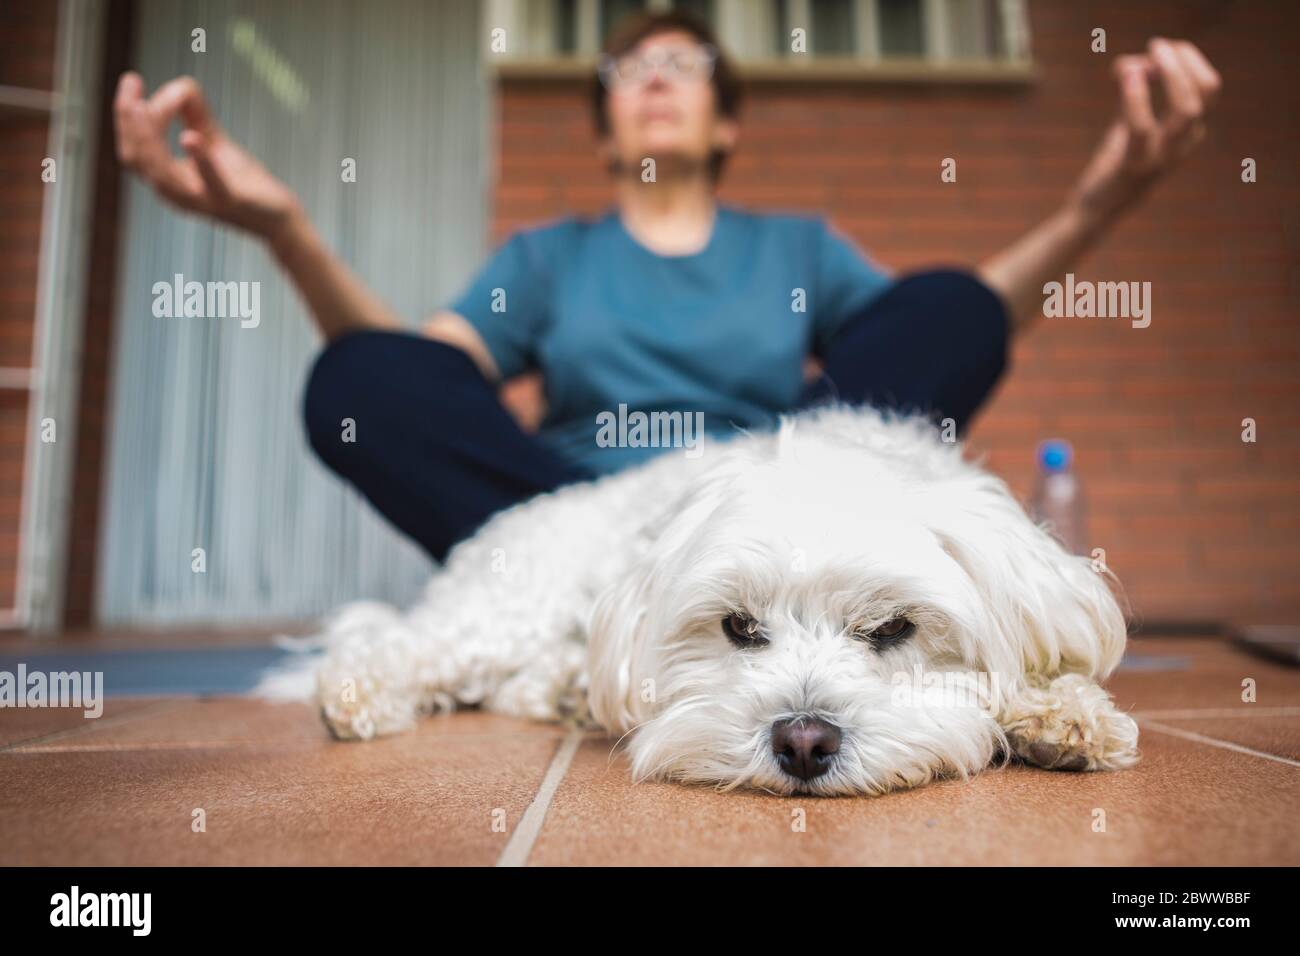 Senior woman meditating on balcony, dog in the foreground Stock Photo